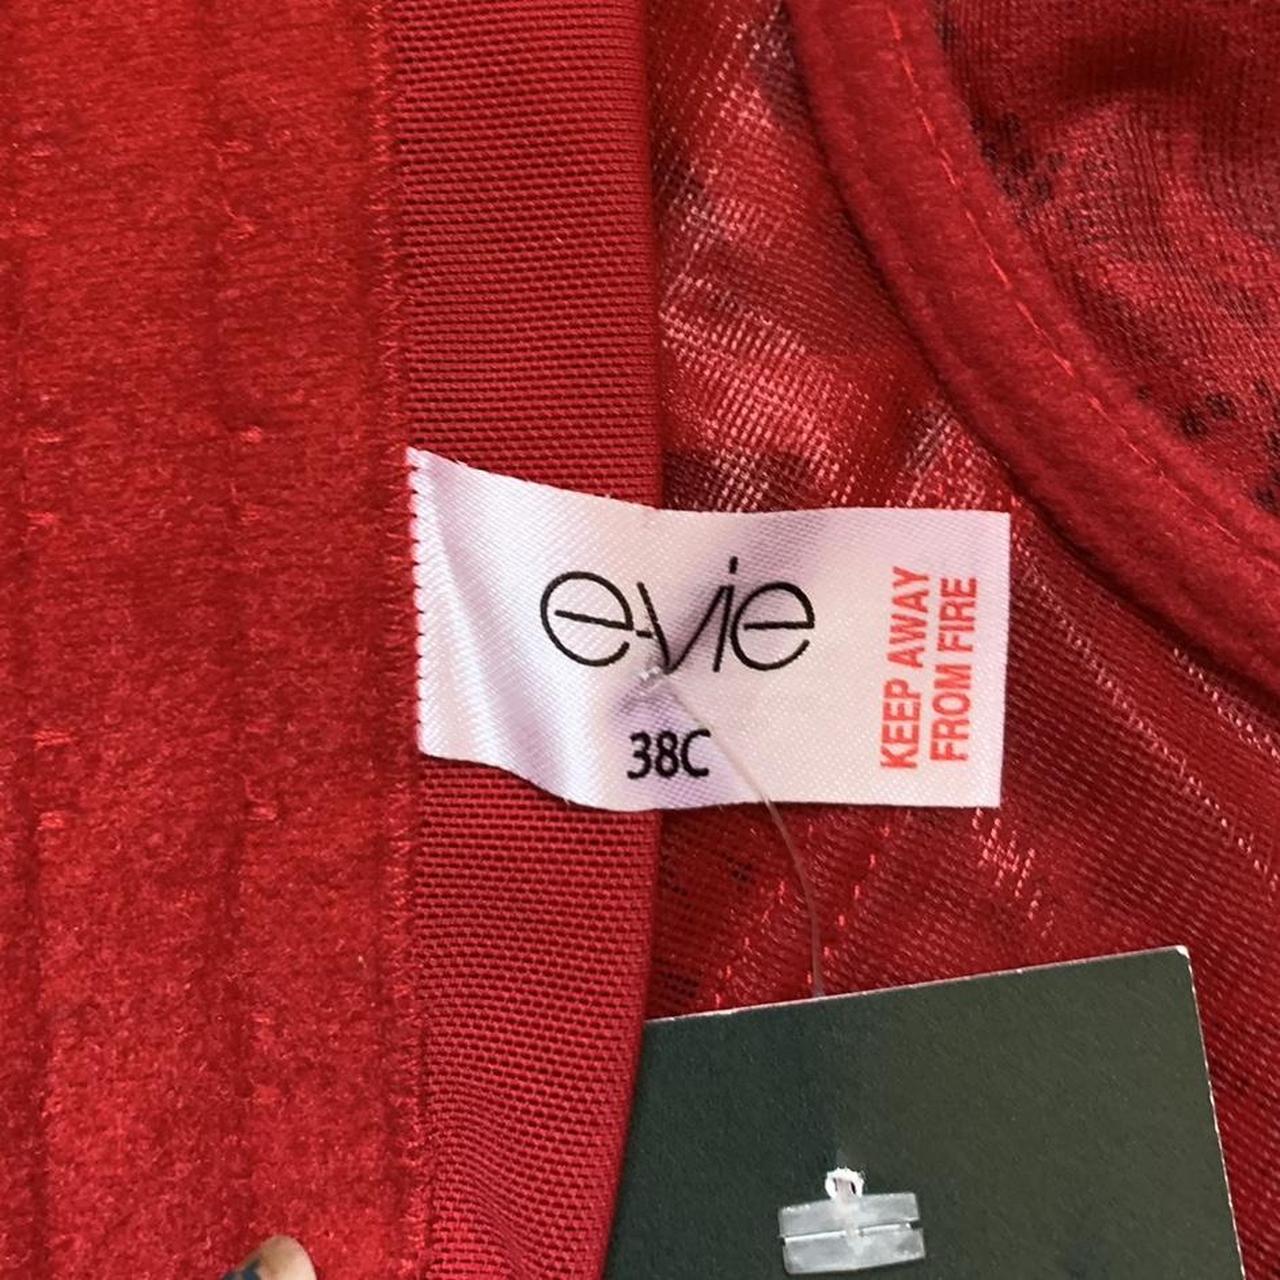 Insane red vintage Evie corset top in incredible... - Depop